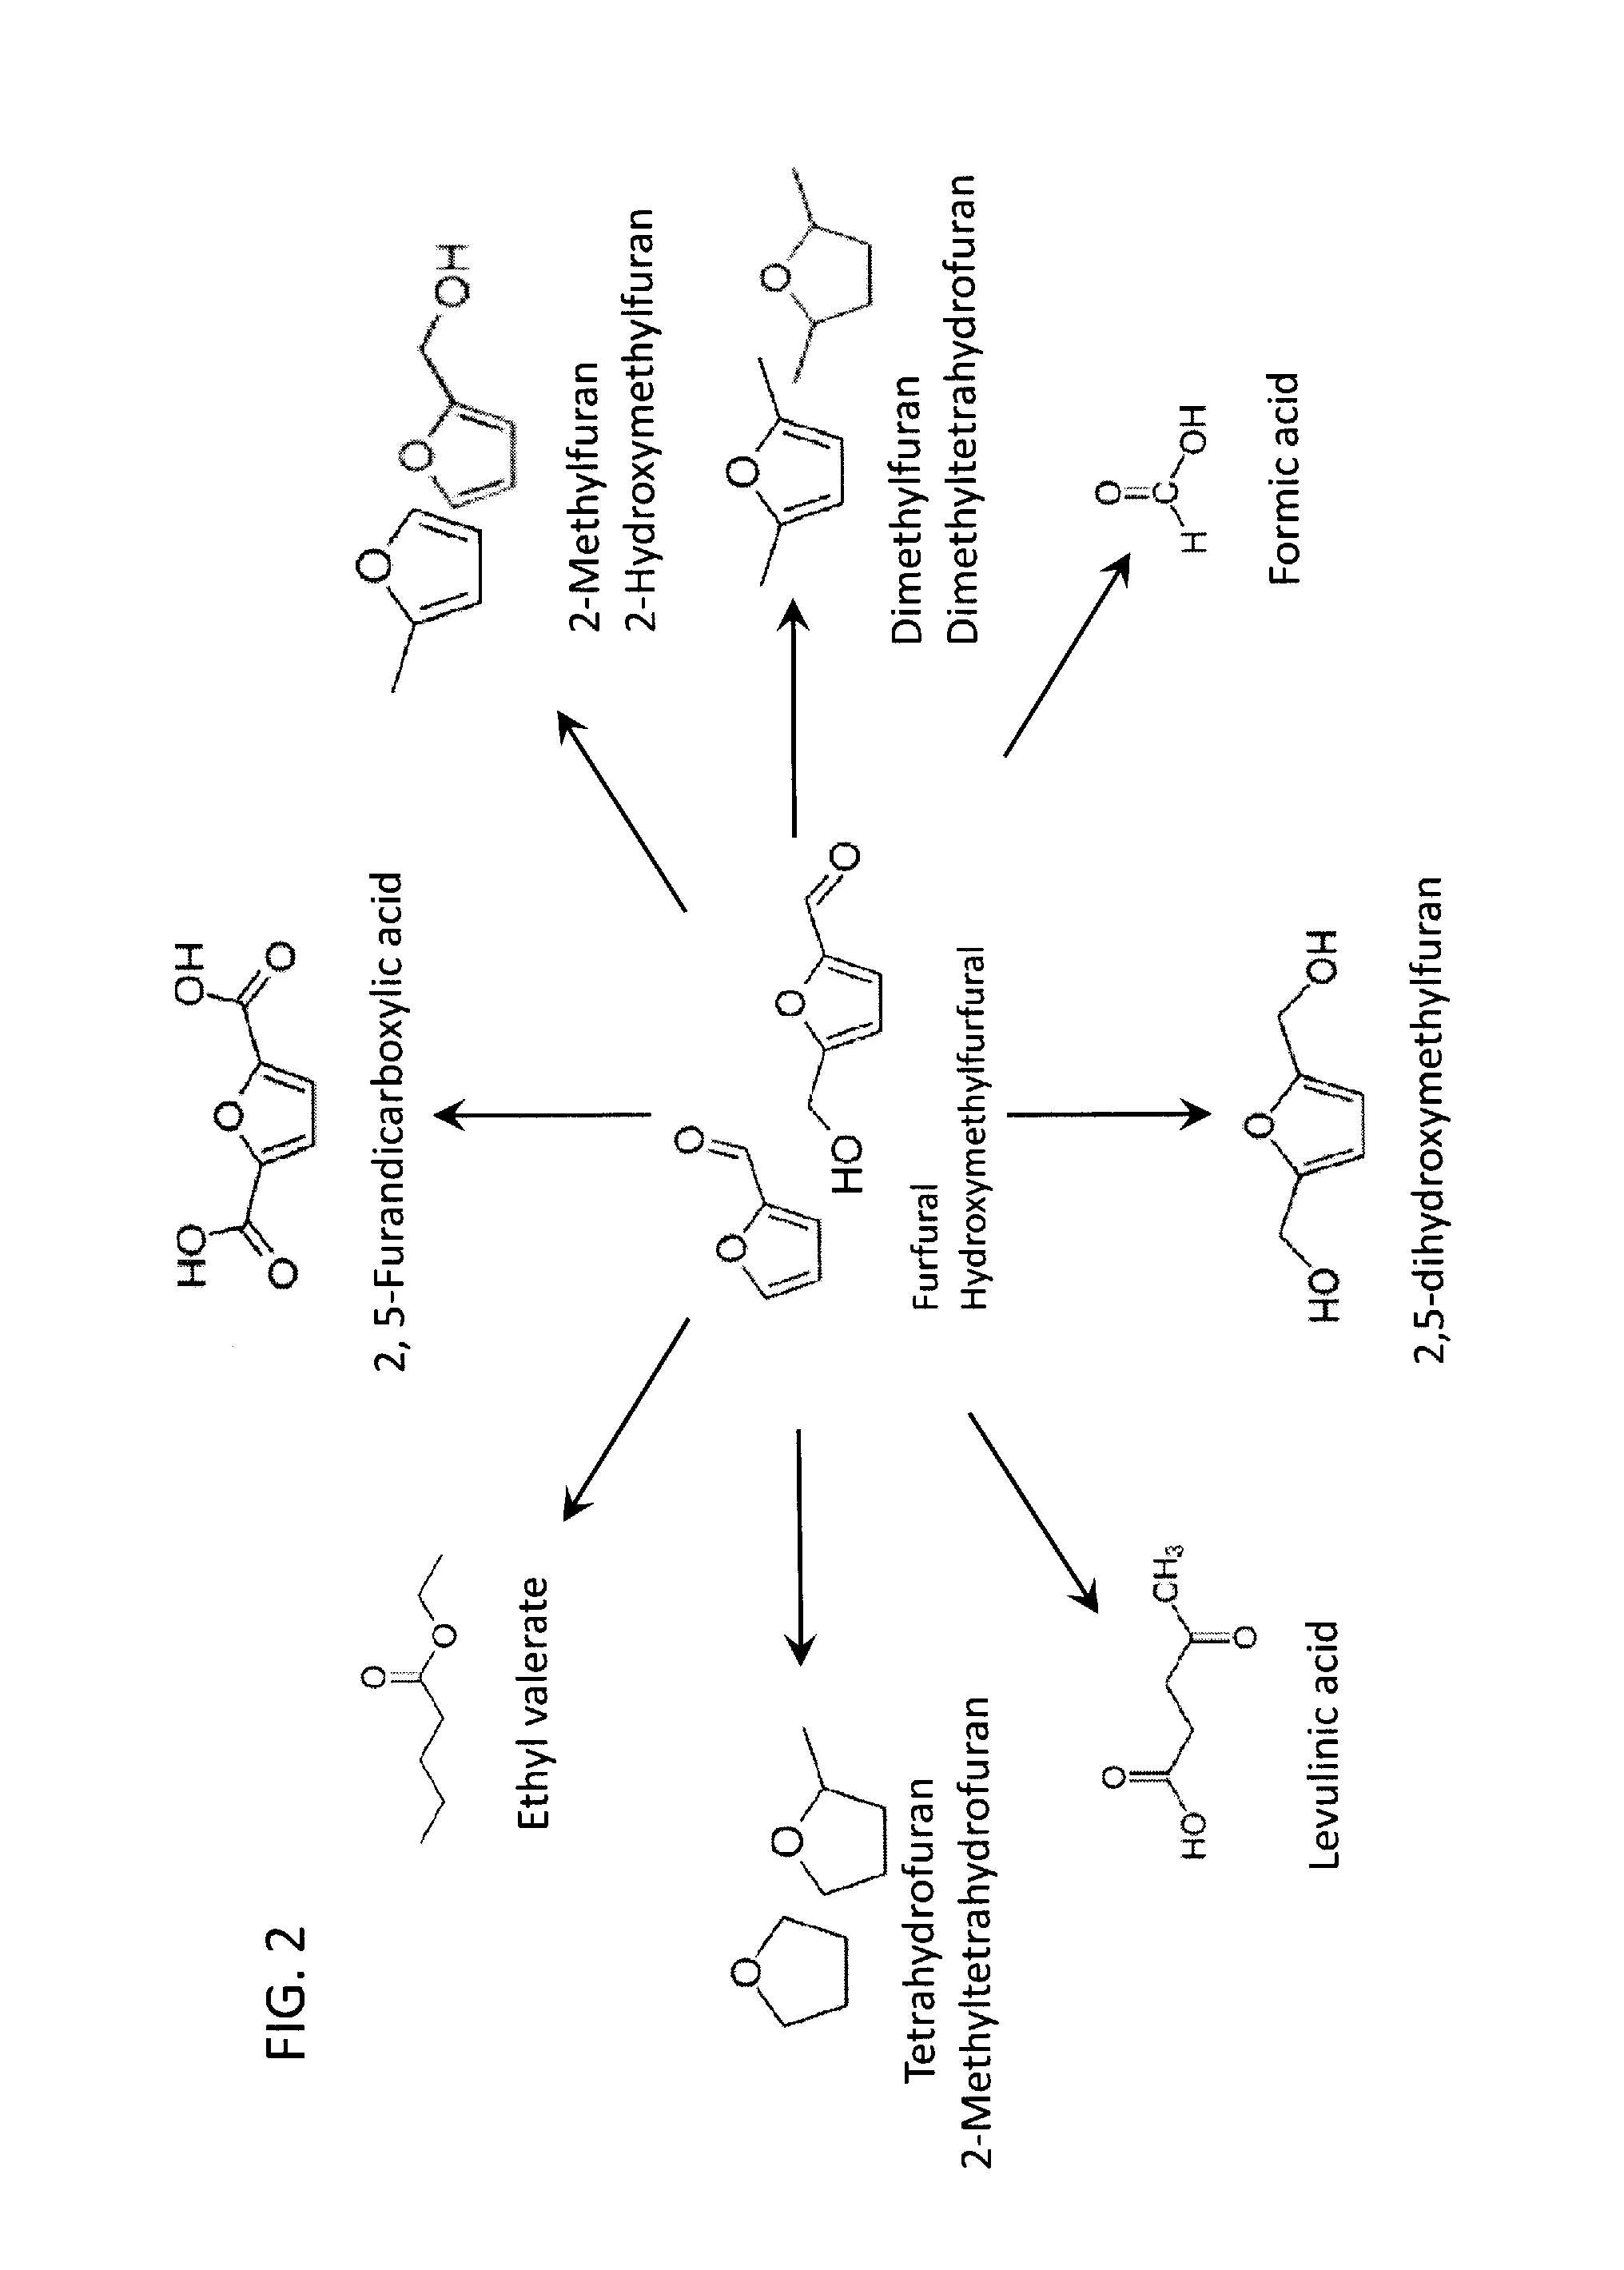 Method to convert monosaccharides to 5-(hydroxymethyl) furfural (HMF) using biomass-derived solvents